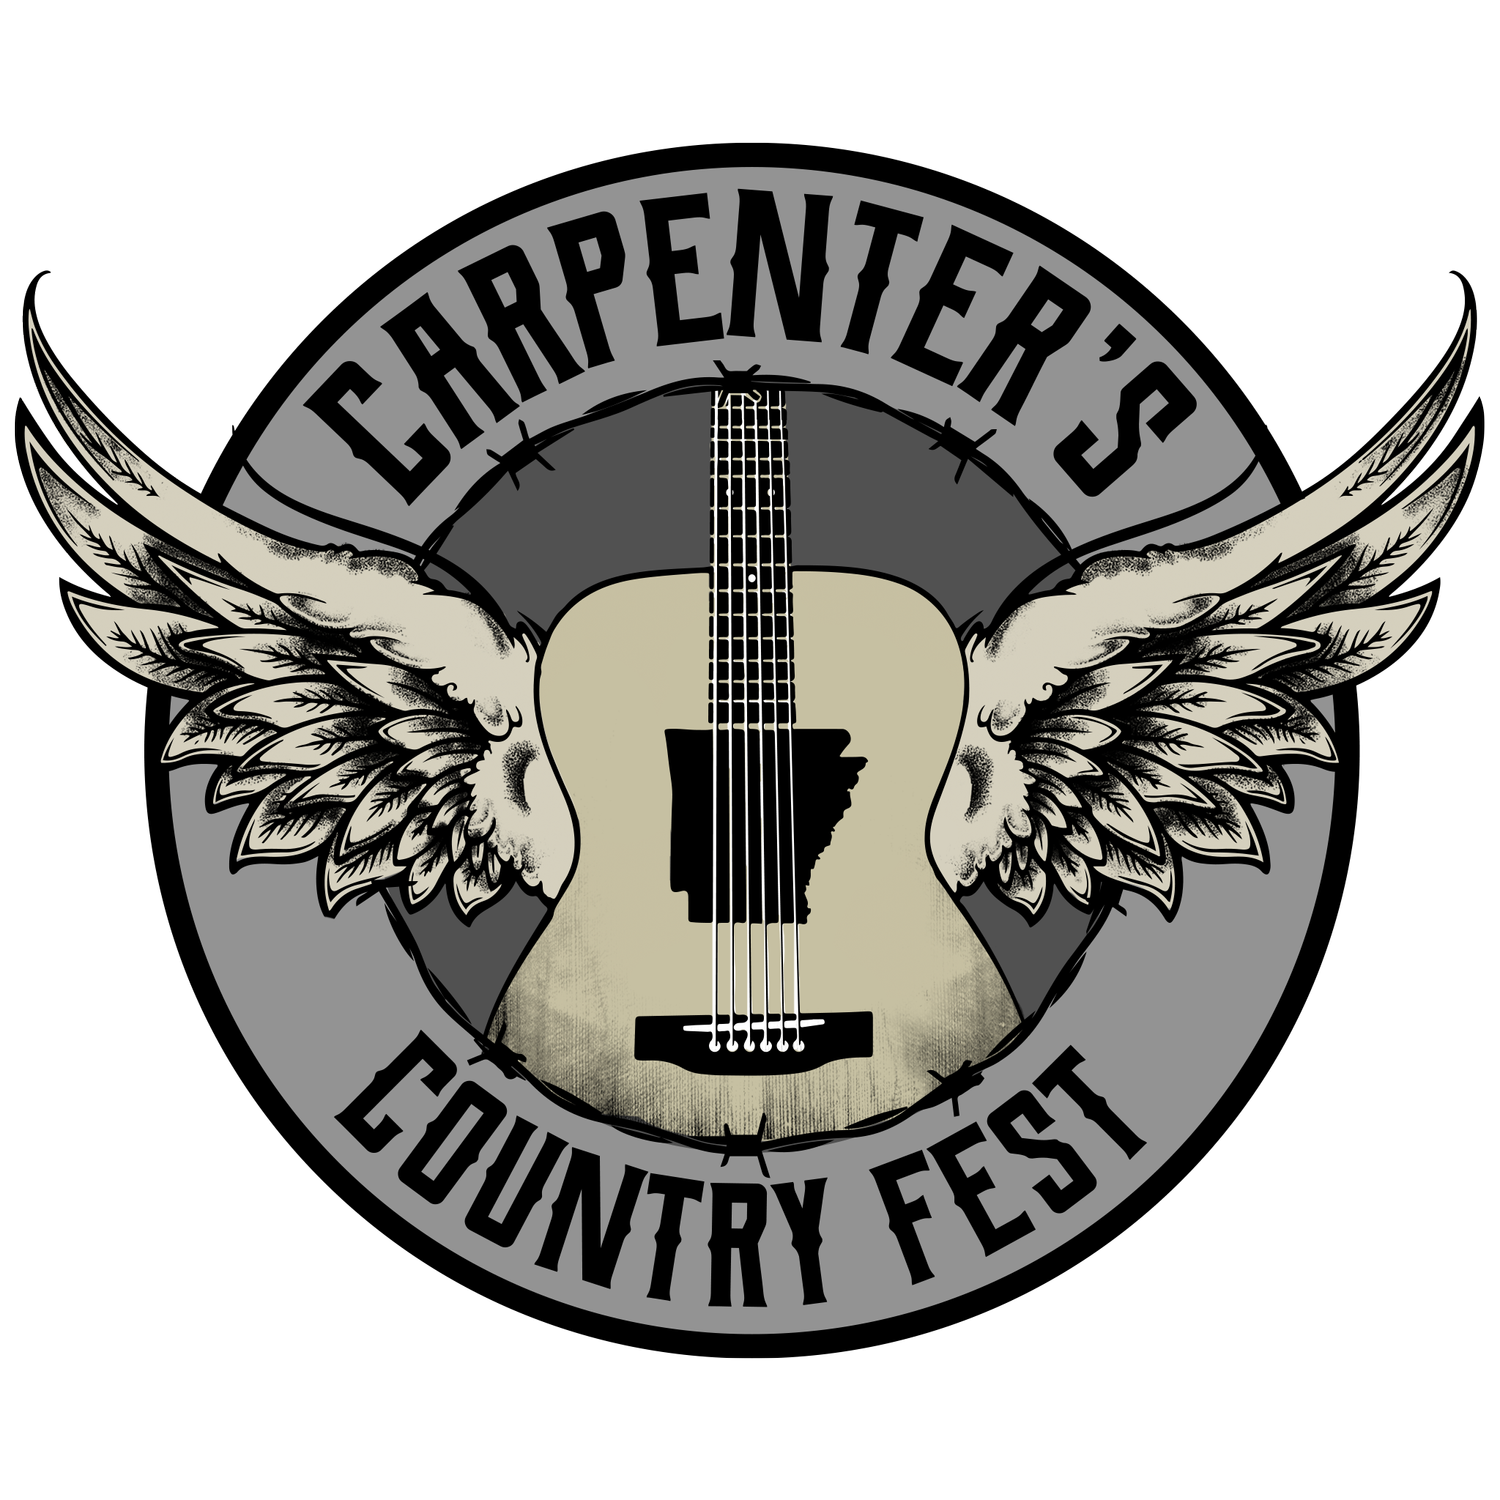 Carpenter&#39;s Country Fest